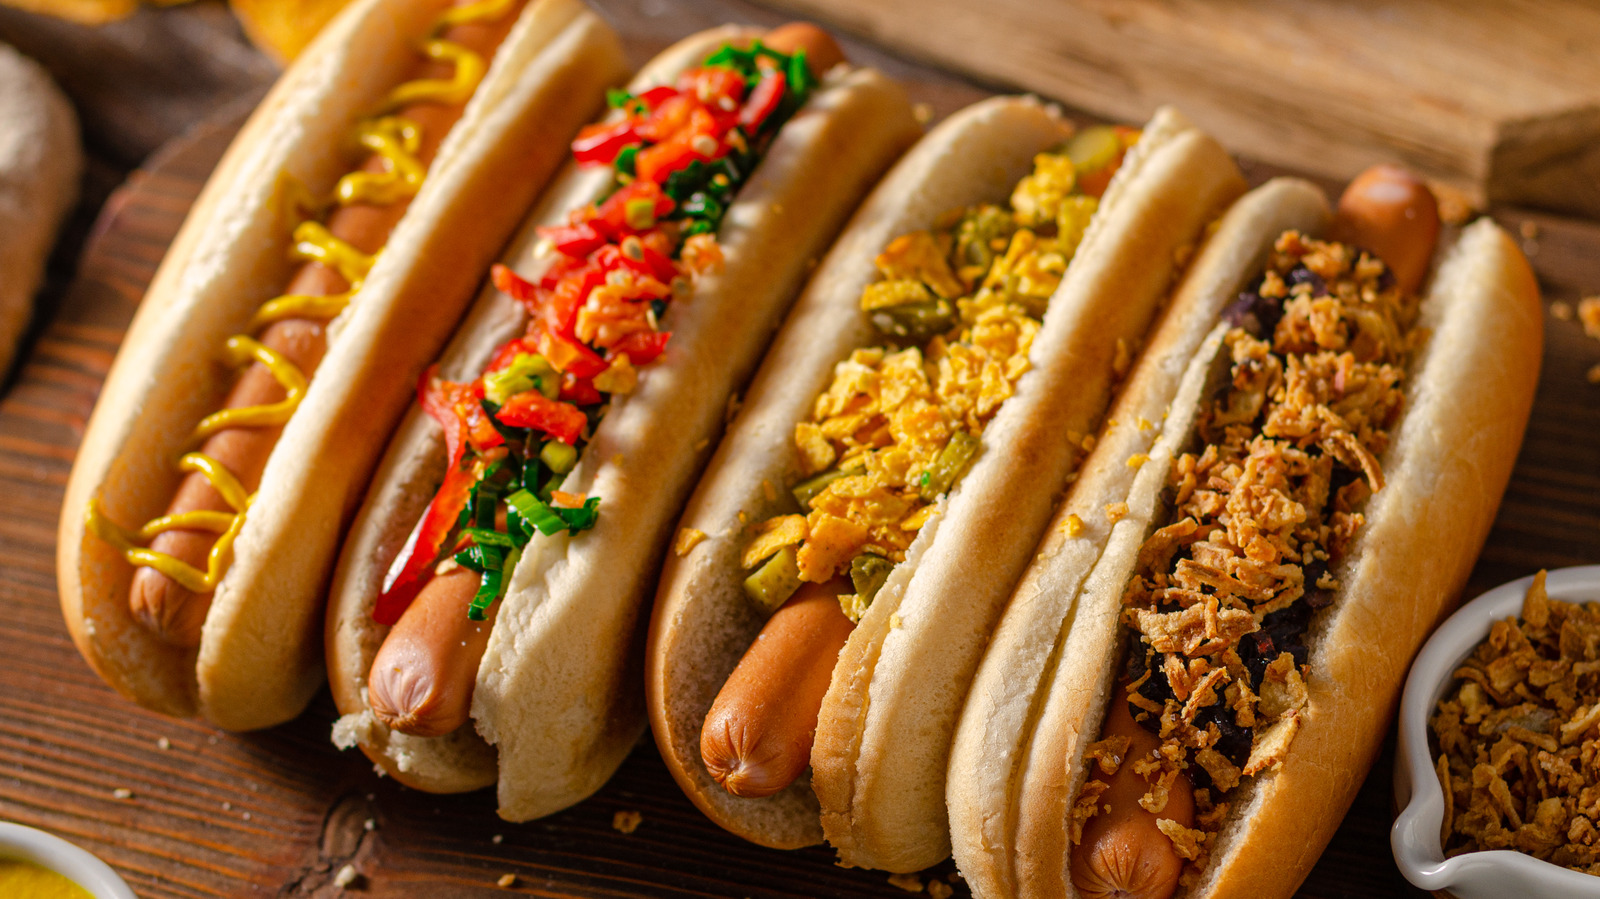 Best Hot Dog Places in North Carolina - Bright Leaf Hotdogs